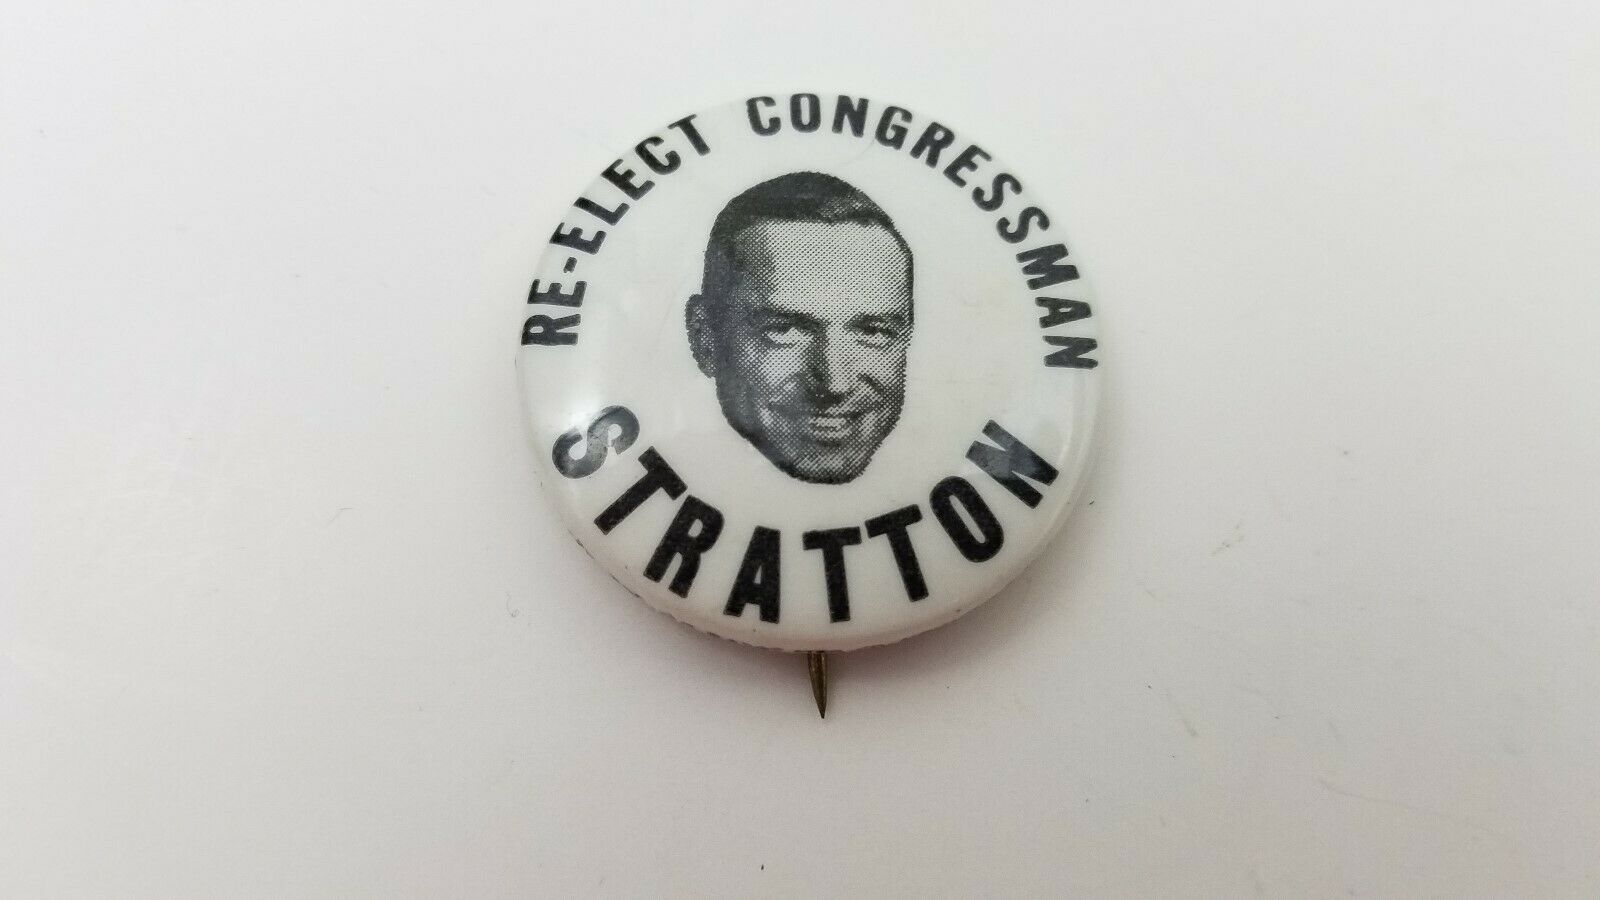 Vintage New York Campaign Re-elect Congressman Stratton Button 1960's Pin G3